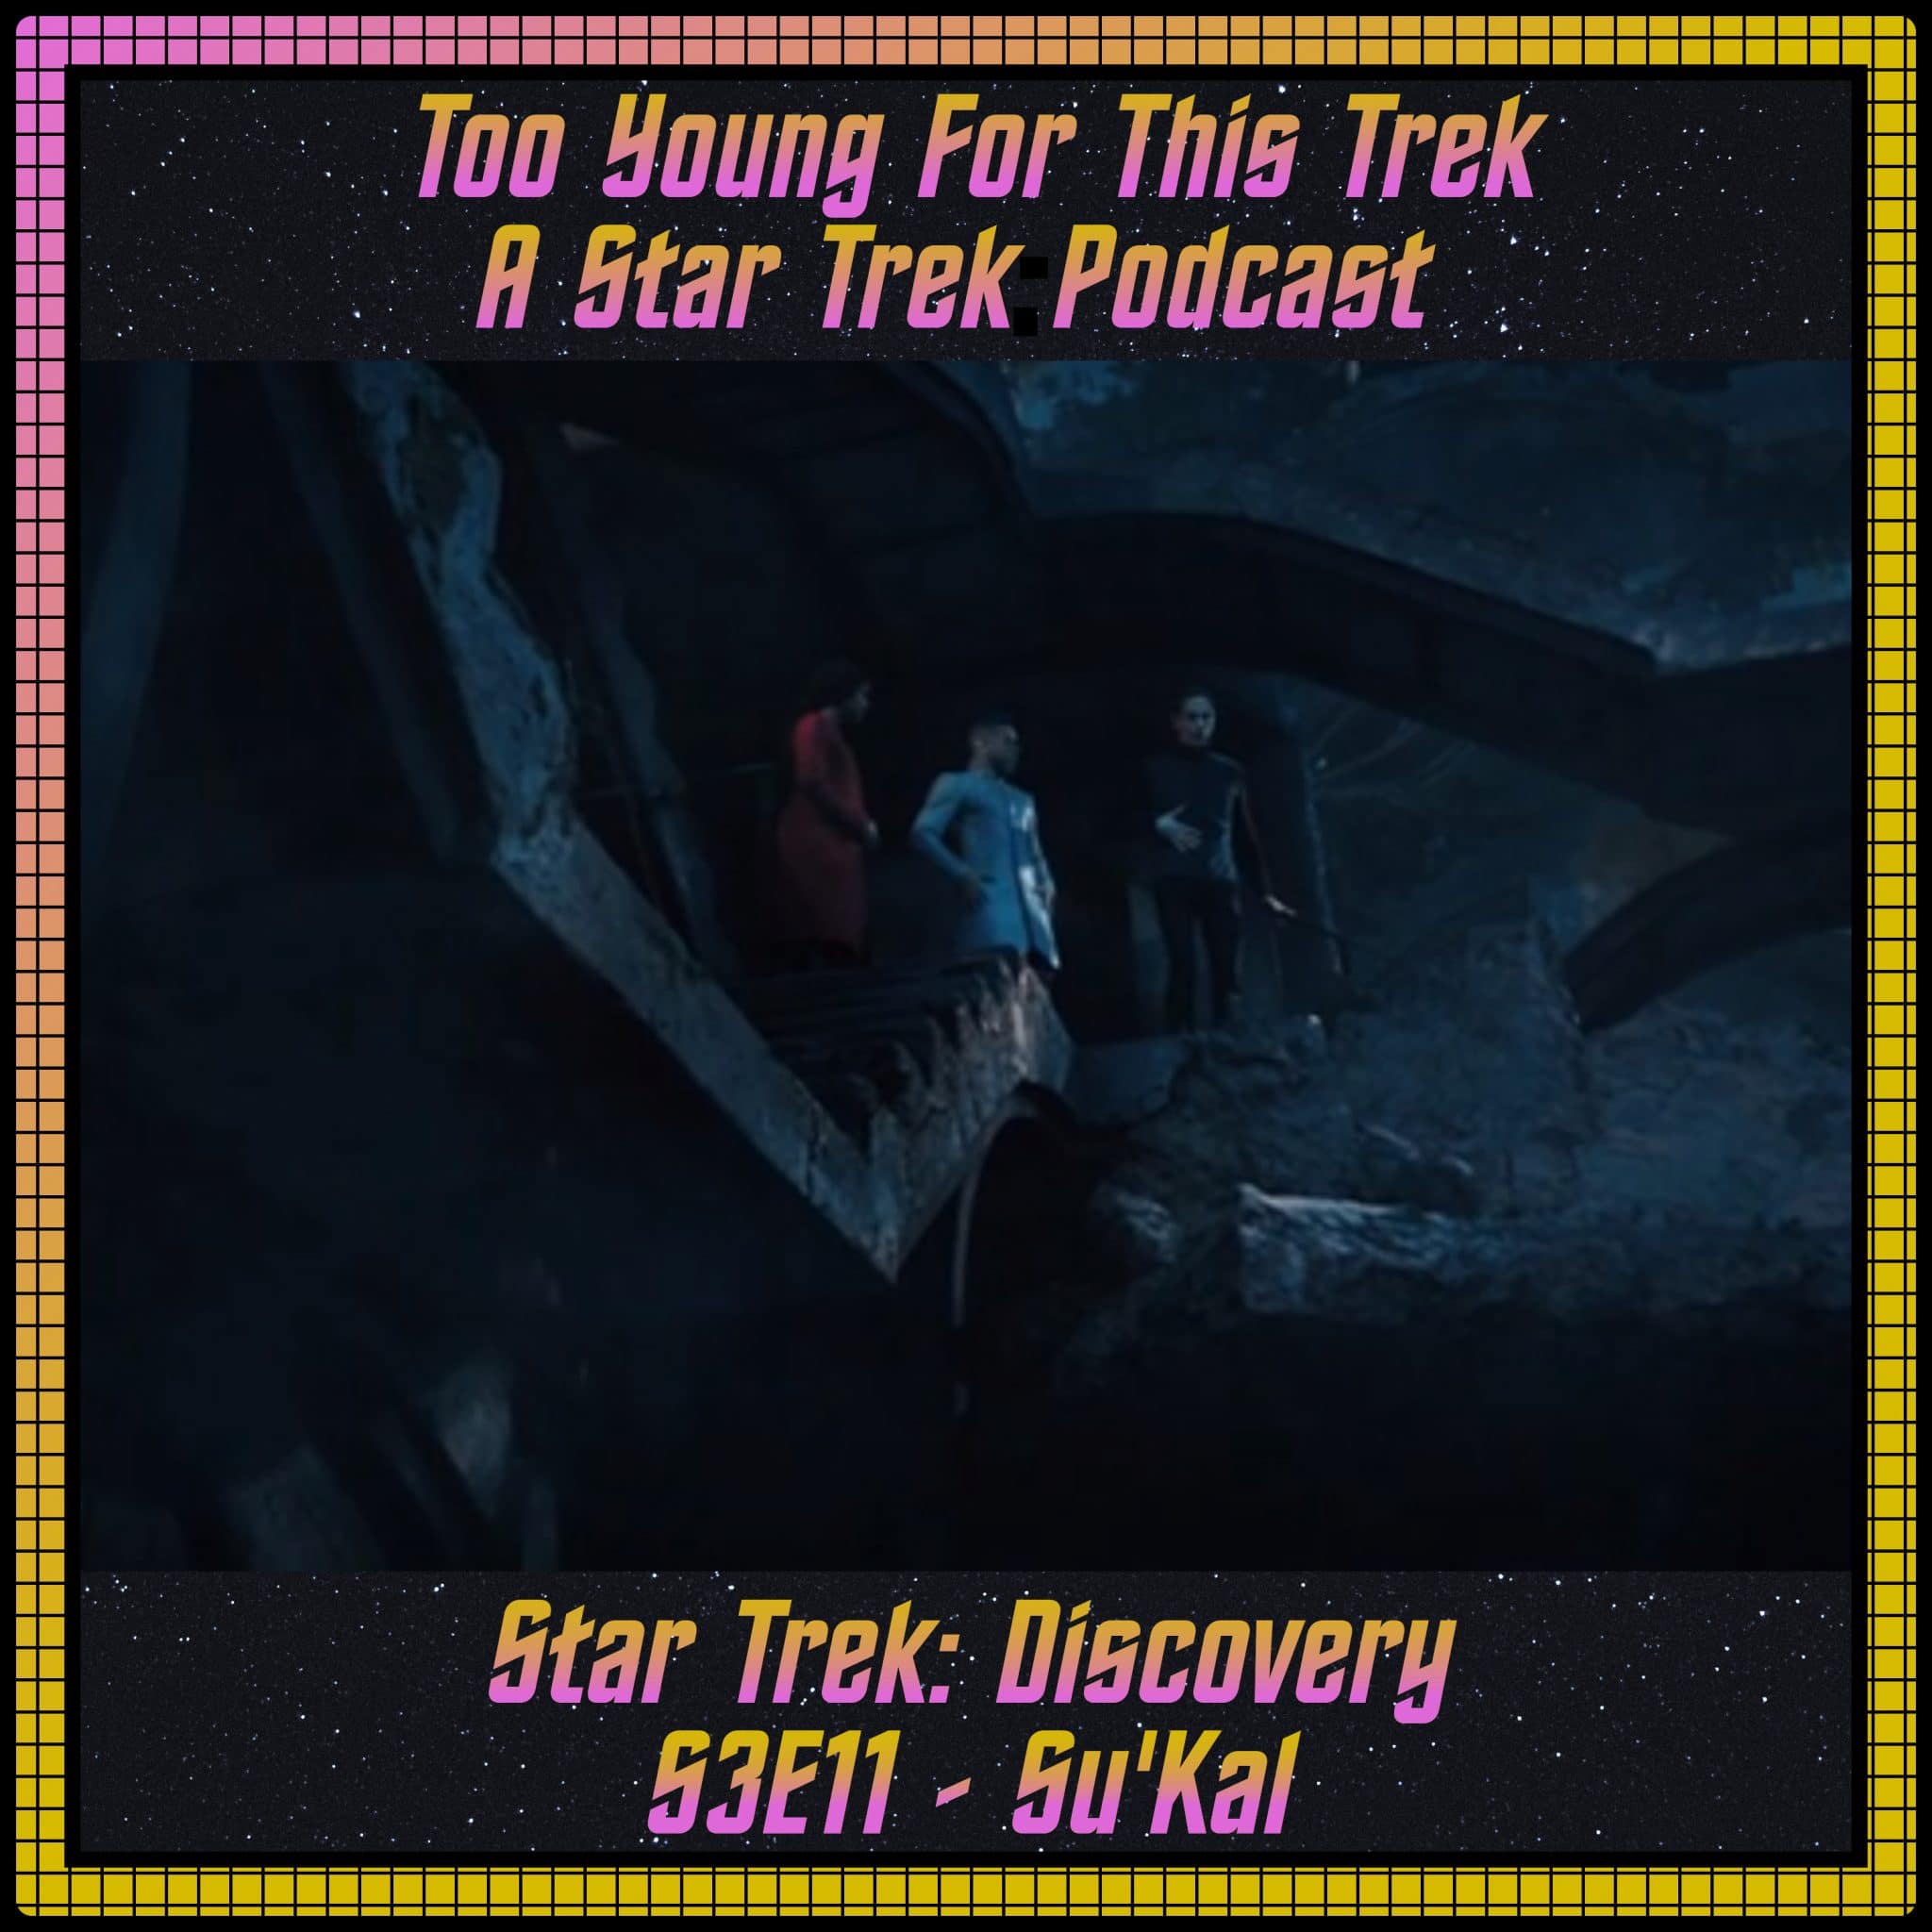 Star Trek: Discovery S3E11 - Su'Kal